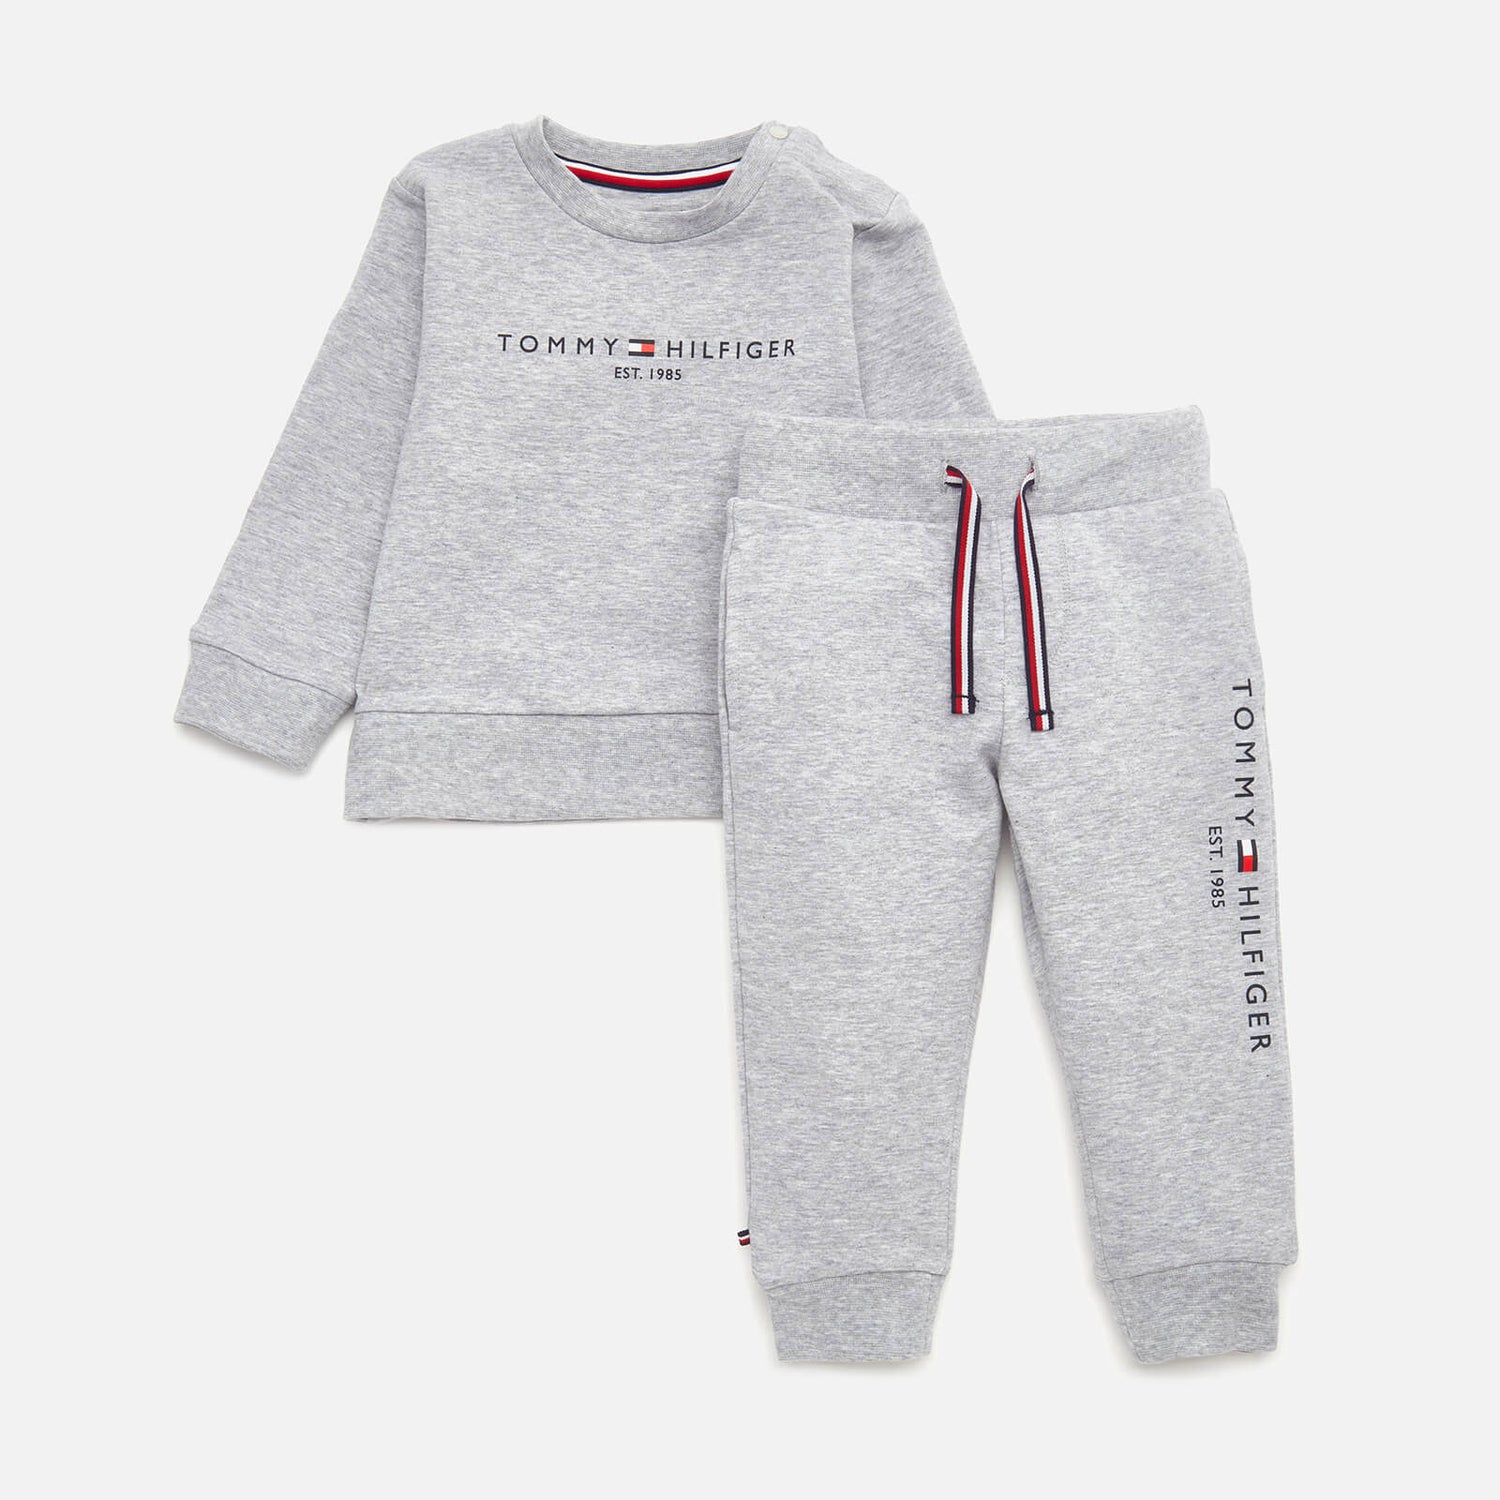 Tommy Hilfiger Babies' Essential Set - Grey | TheHut.com